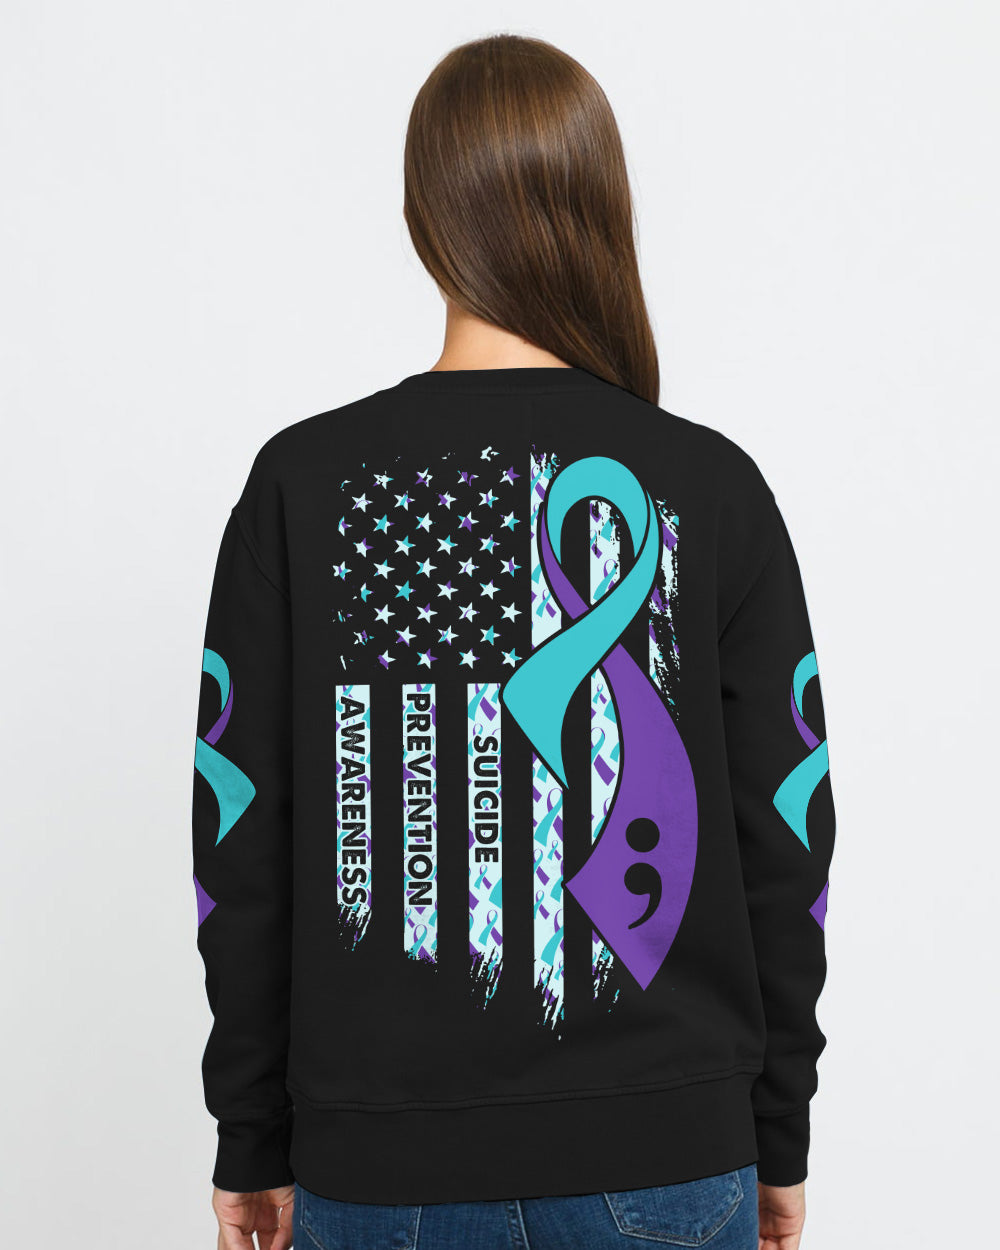 Flag Ribbon Women's Suicide Prevention Awareness Sweatshirt